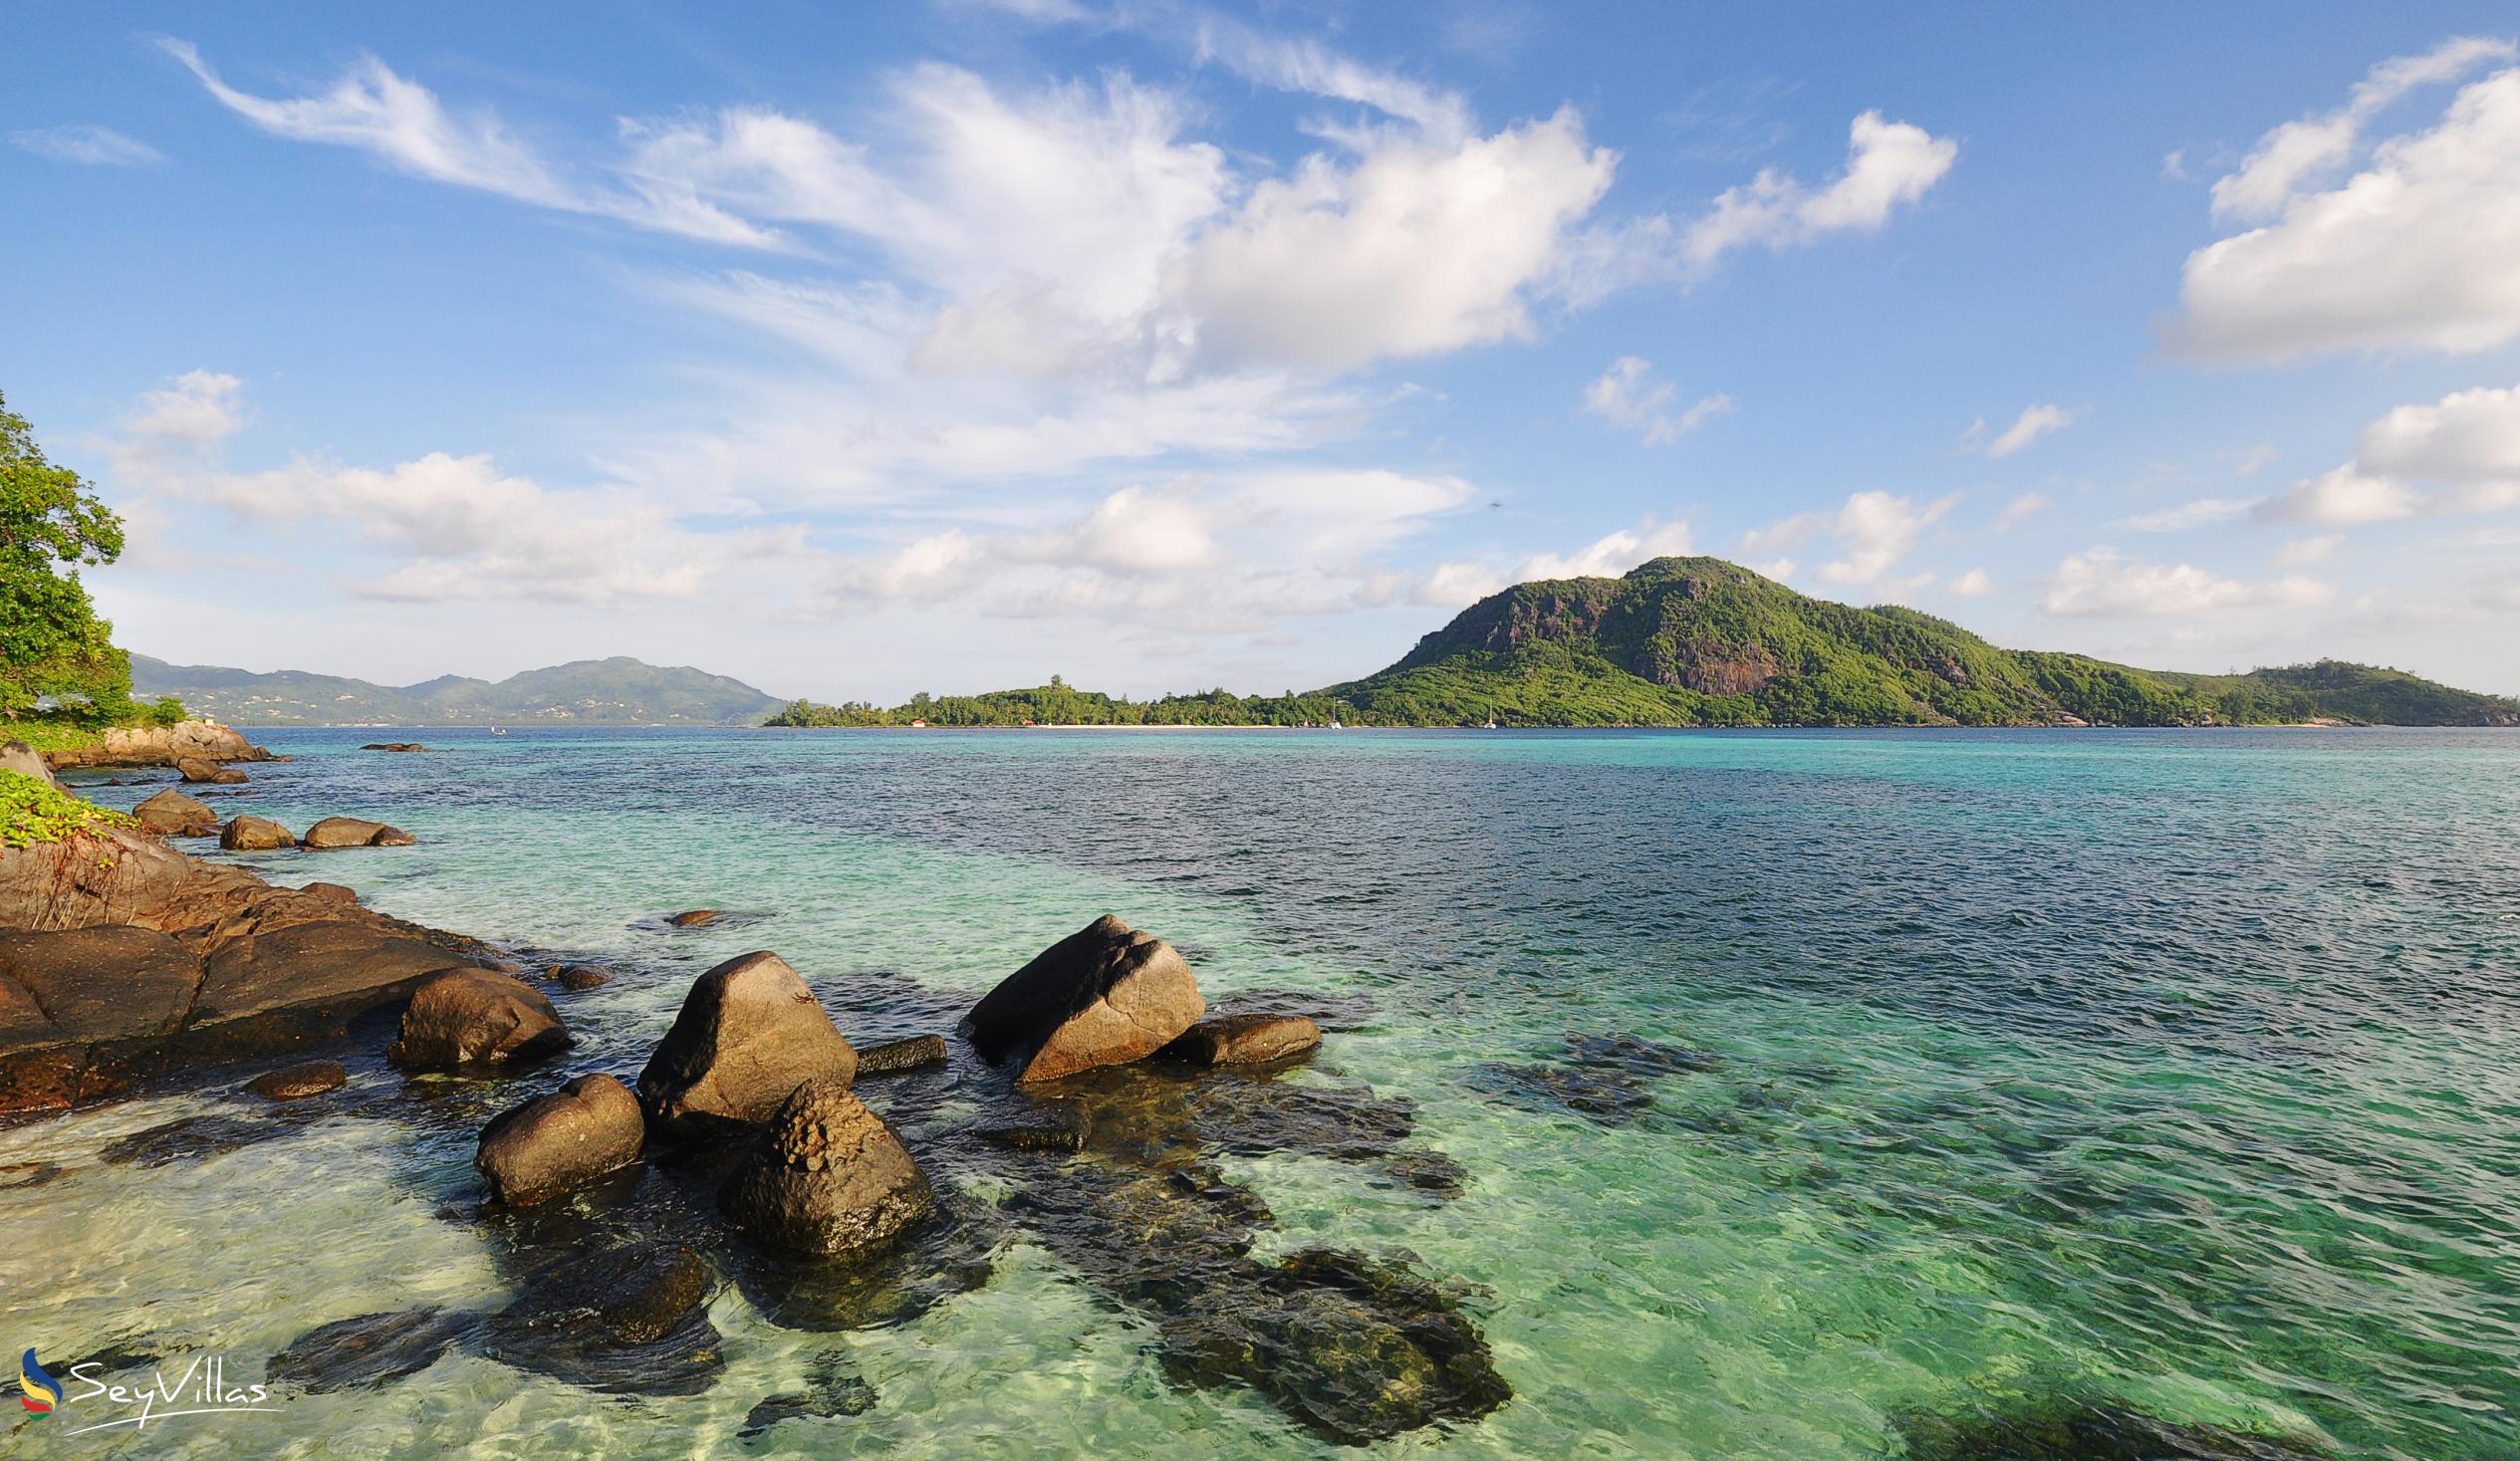 Photo 78: JA Enchanted Island Resort - Location - Round Island (Seychelles)